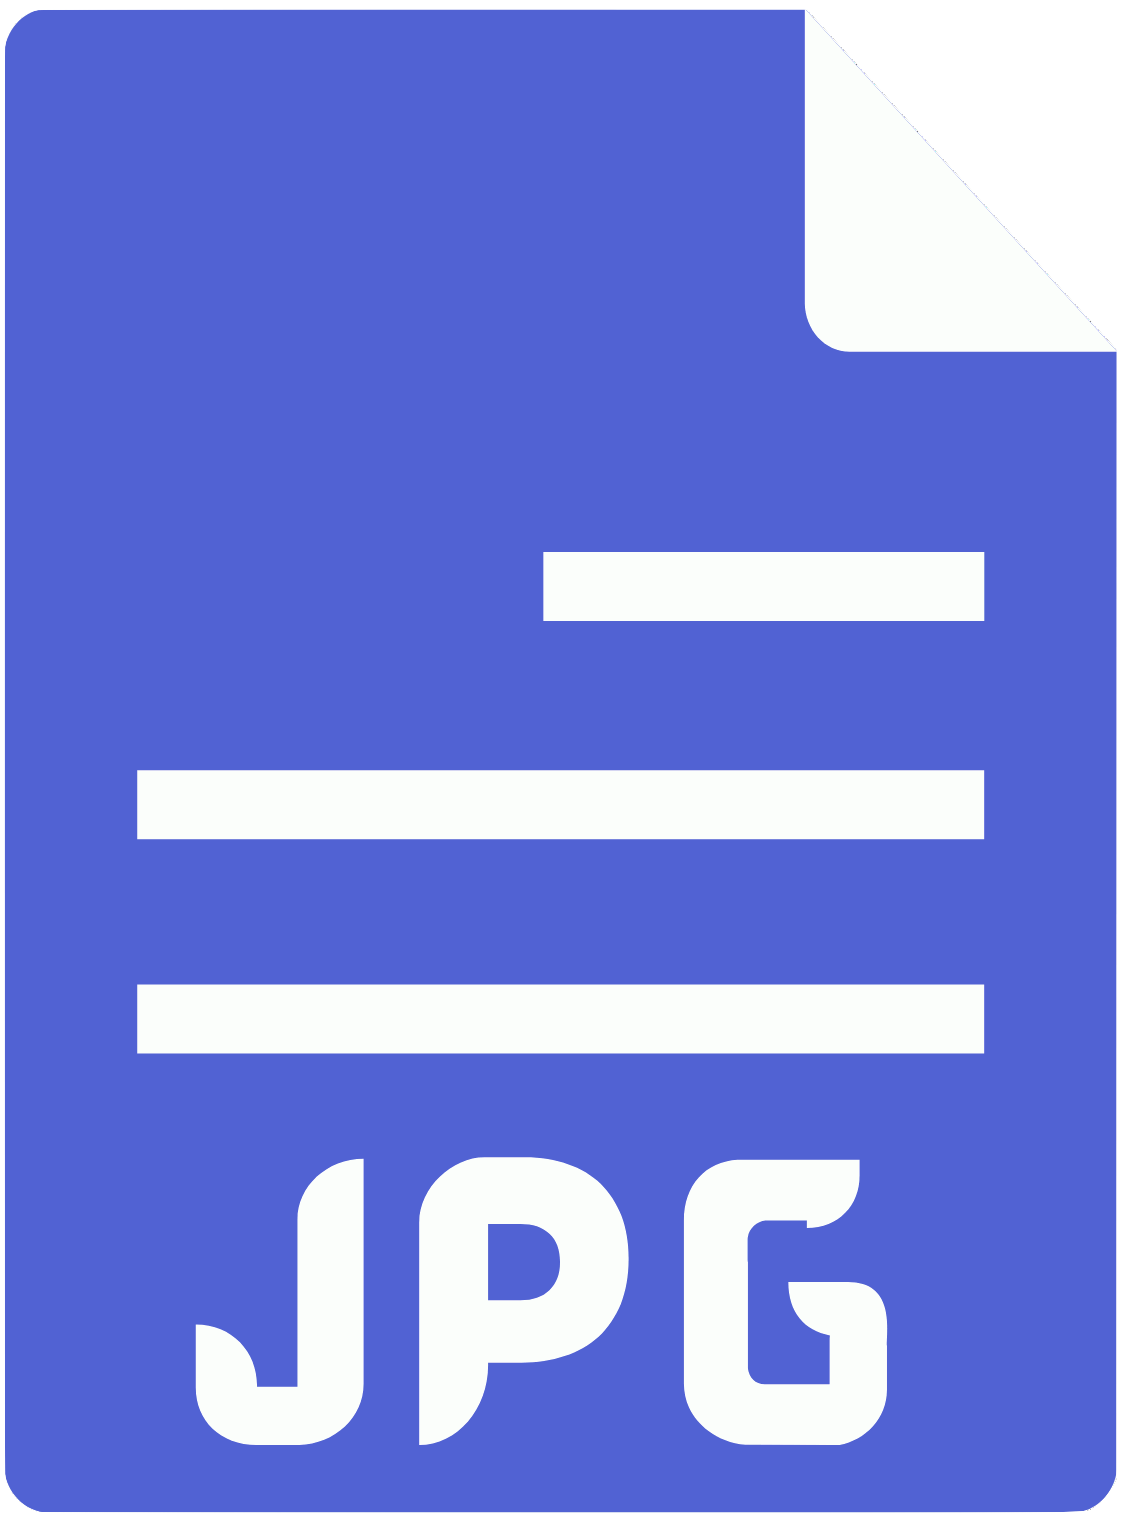 JPG logo